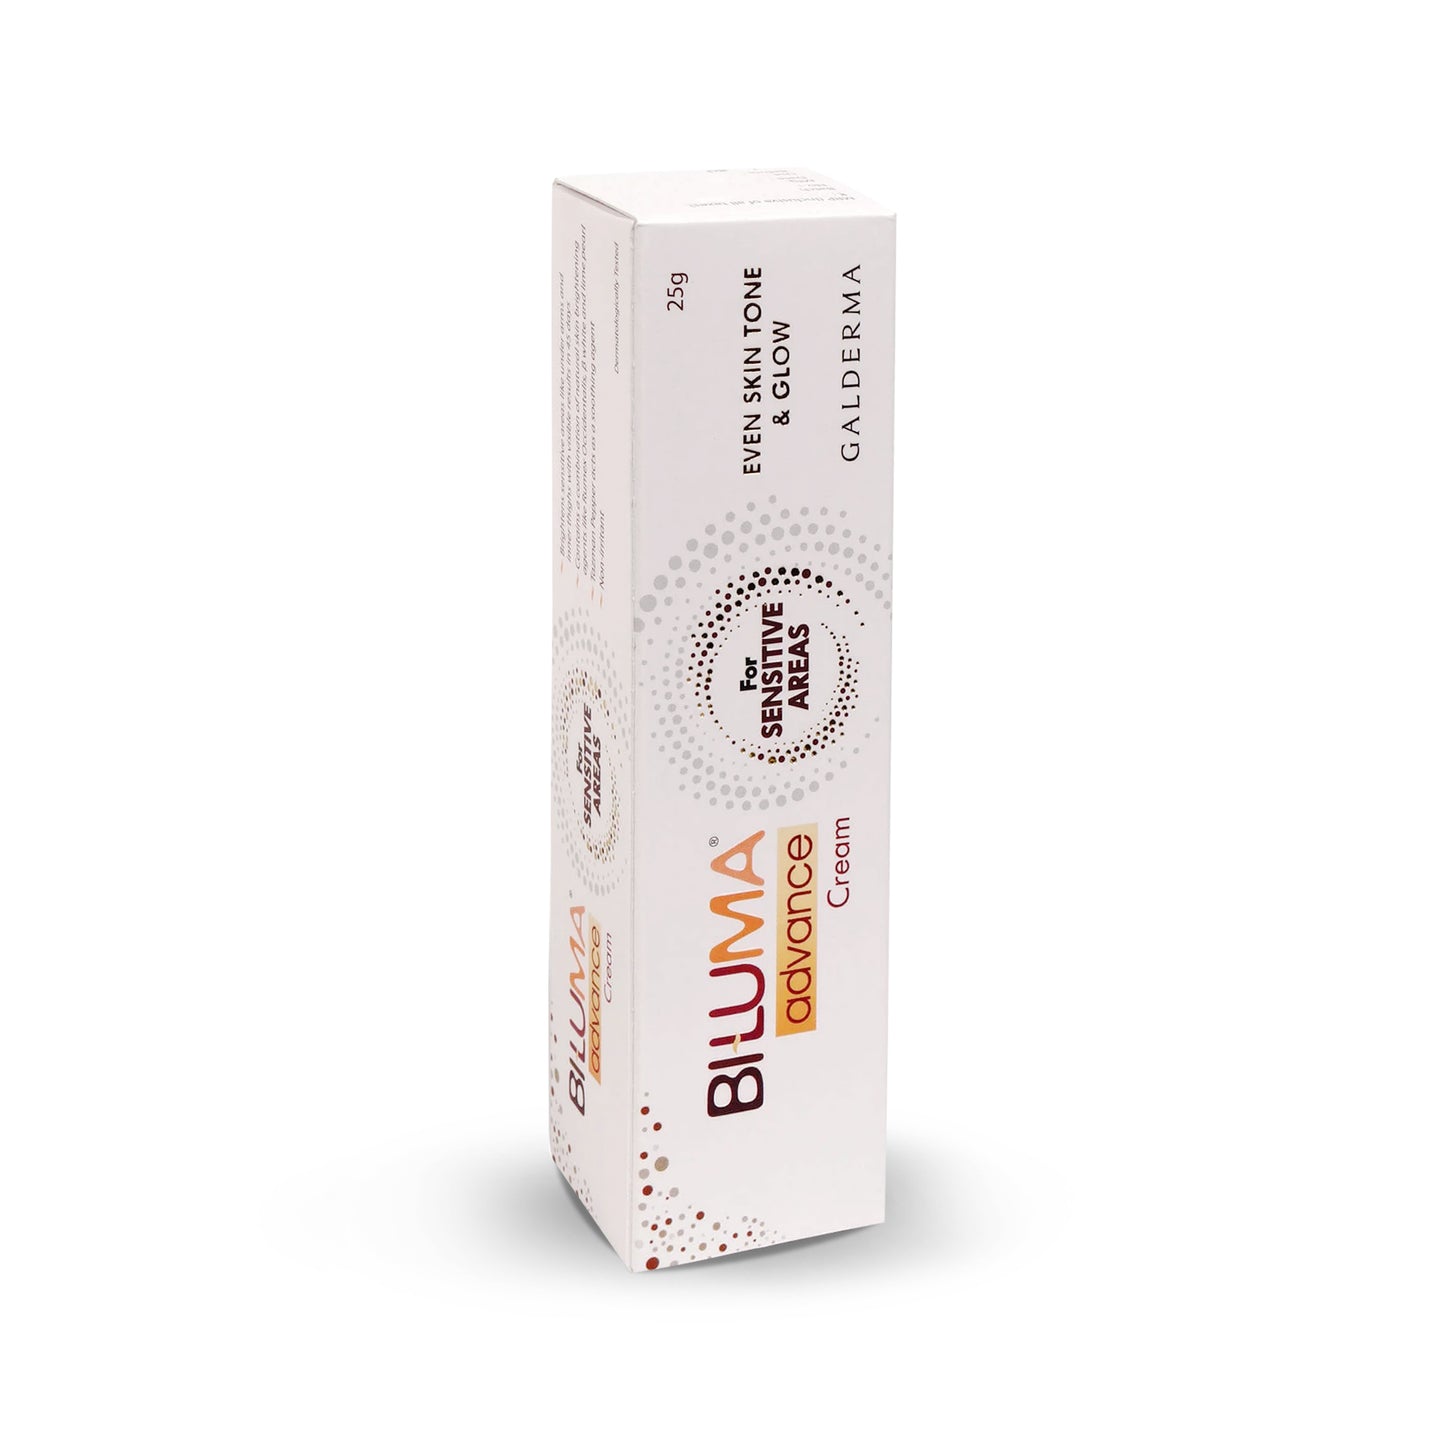 Biluma Advanced Cream For Sensitive Areas, 25gm